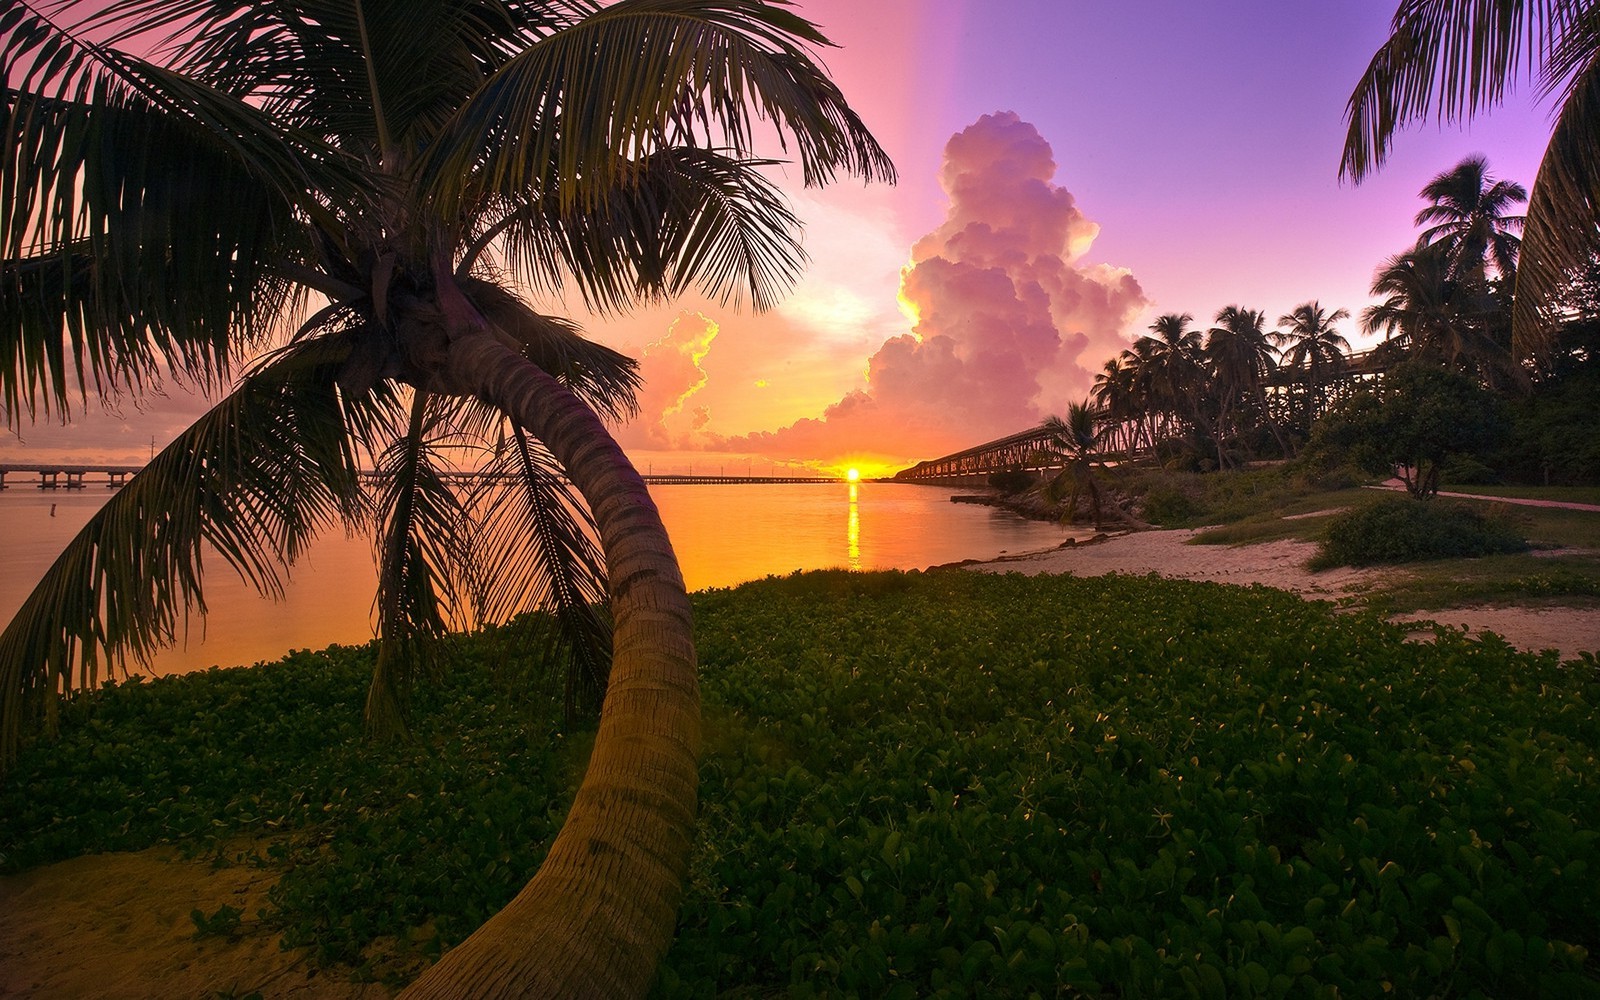 Landscape Nature Beach Sunset Palm Trees Sea Sky Clouds